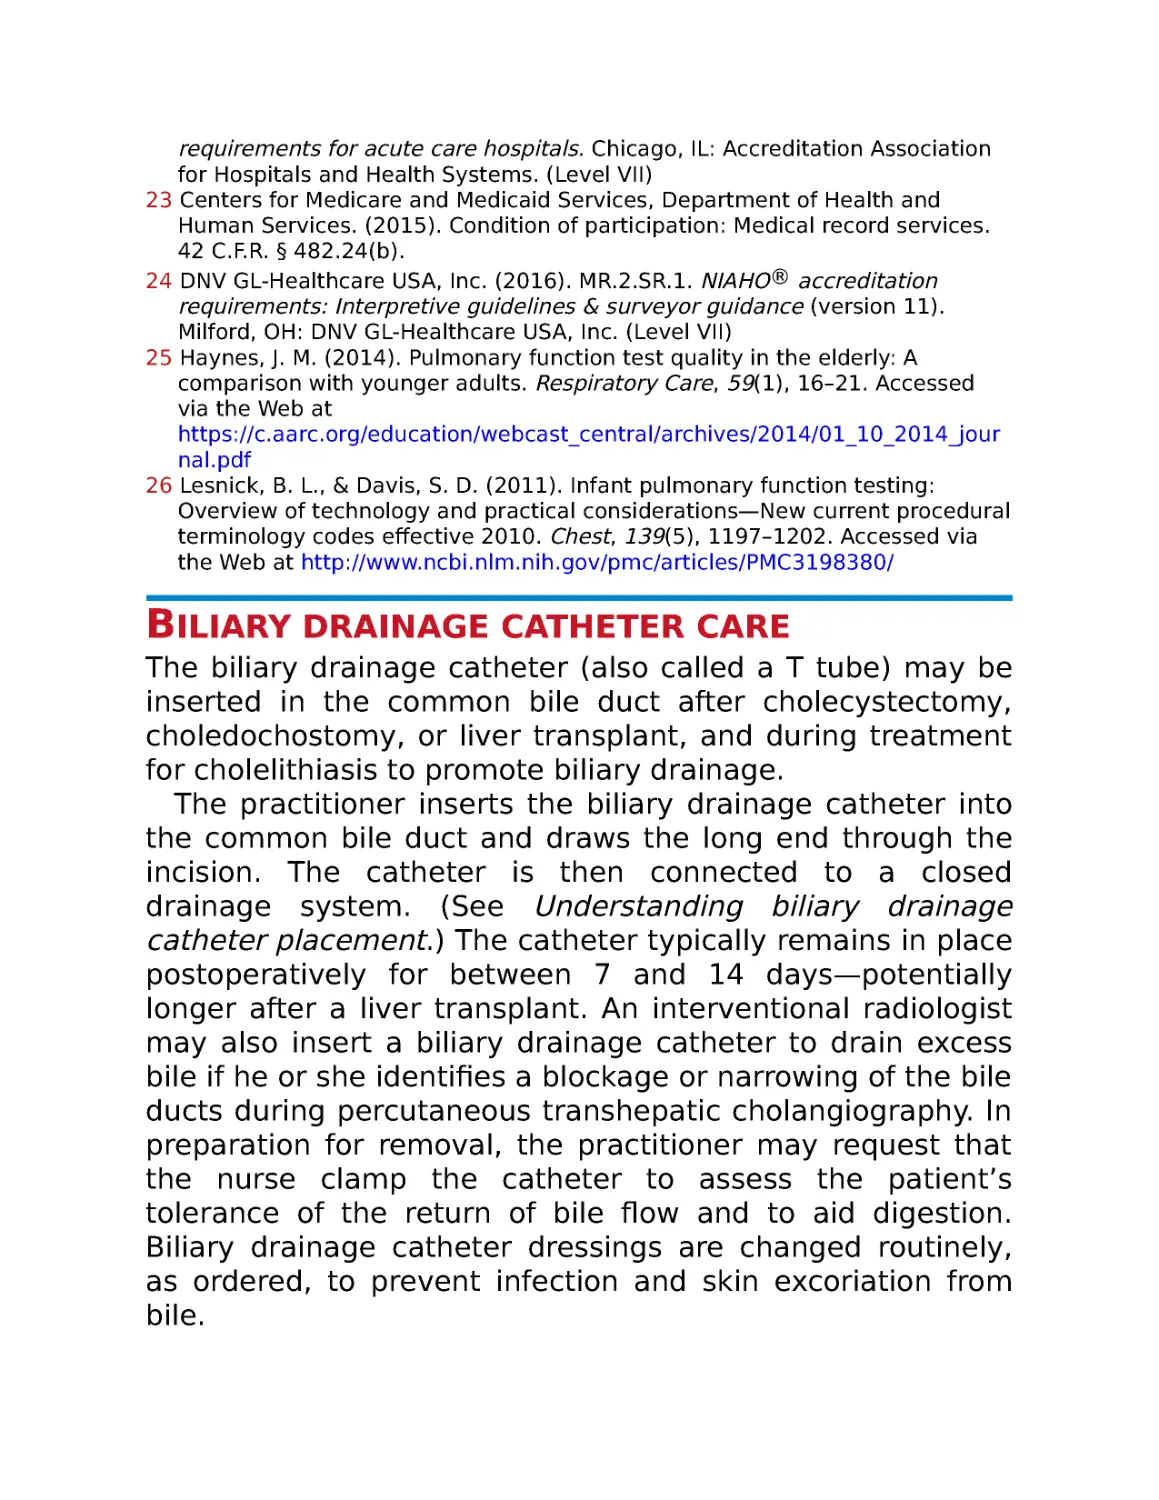 Biliary drainage catheter care